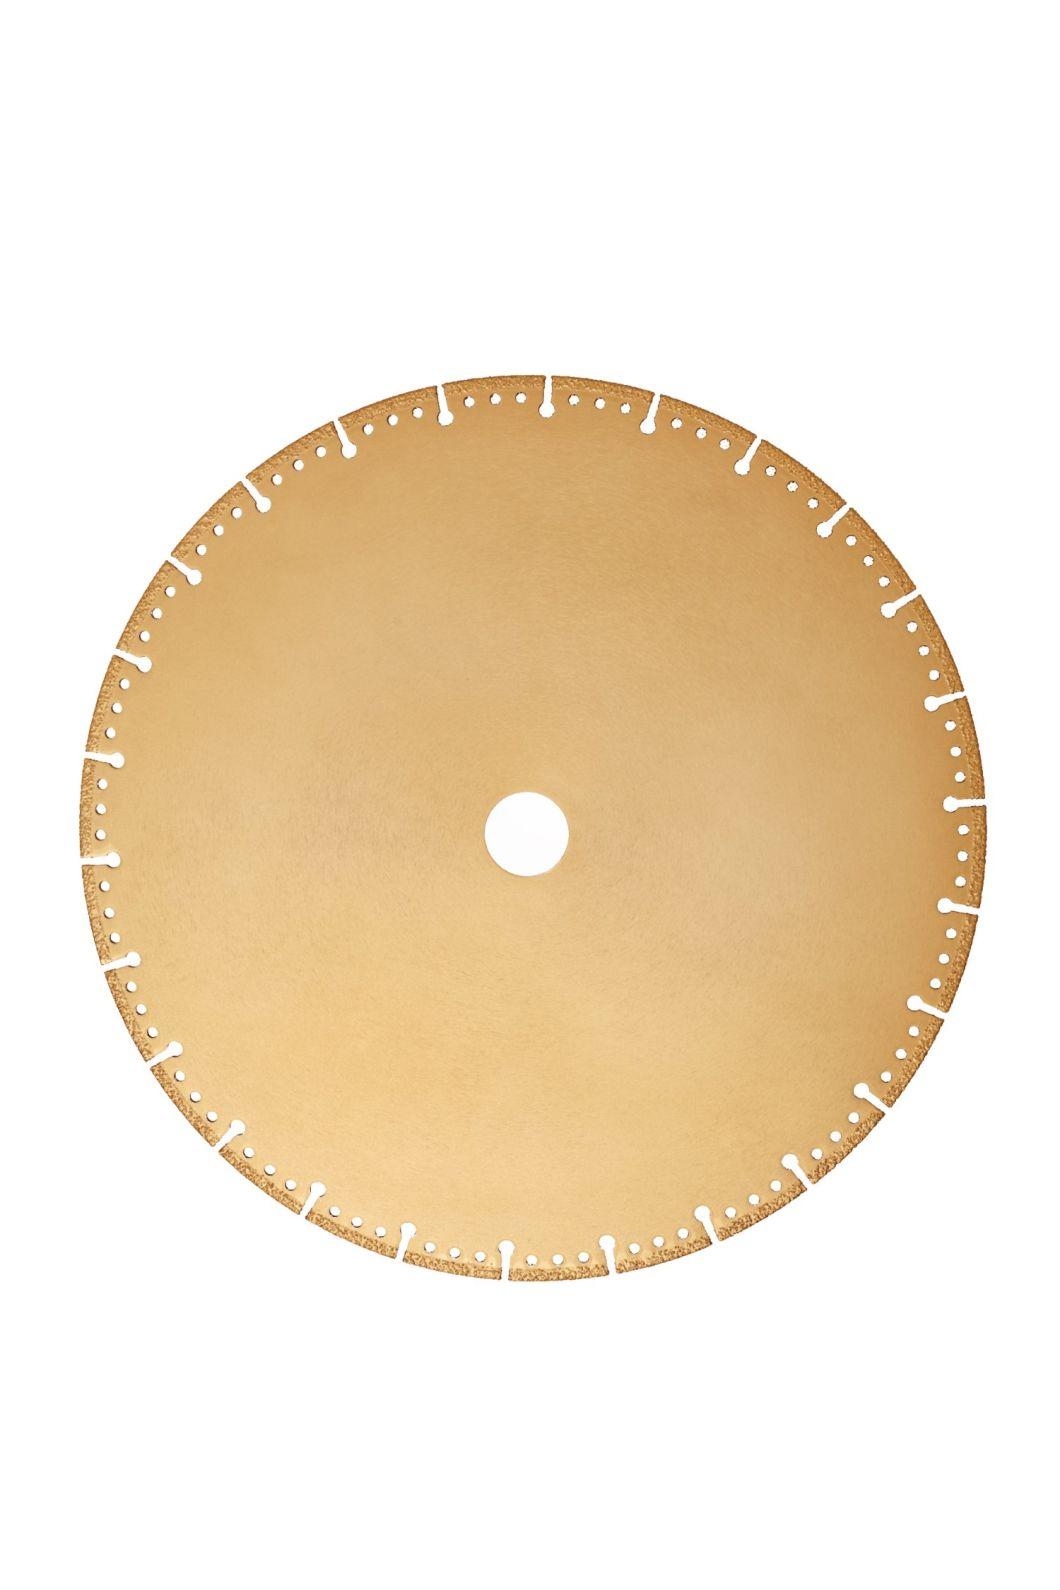 Taa Brand Diamond Abrasive Tools Brazing Process Disc Cutting Iron Cutting Disc